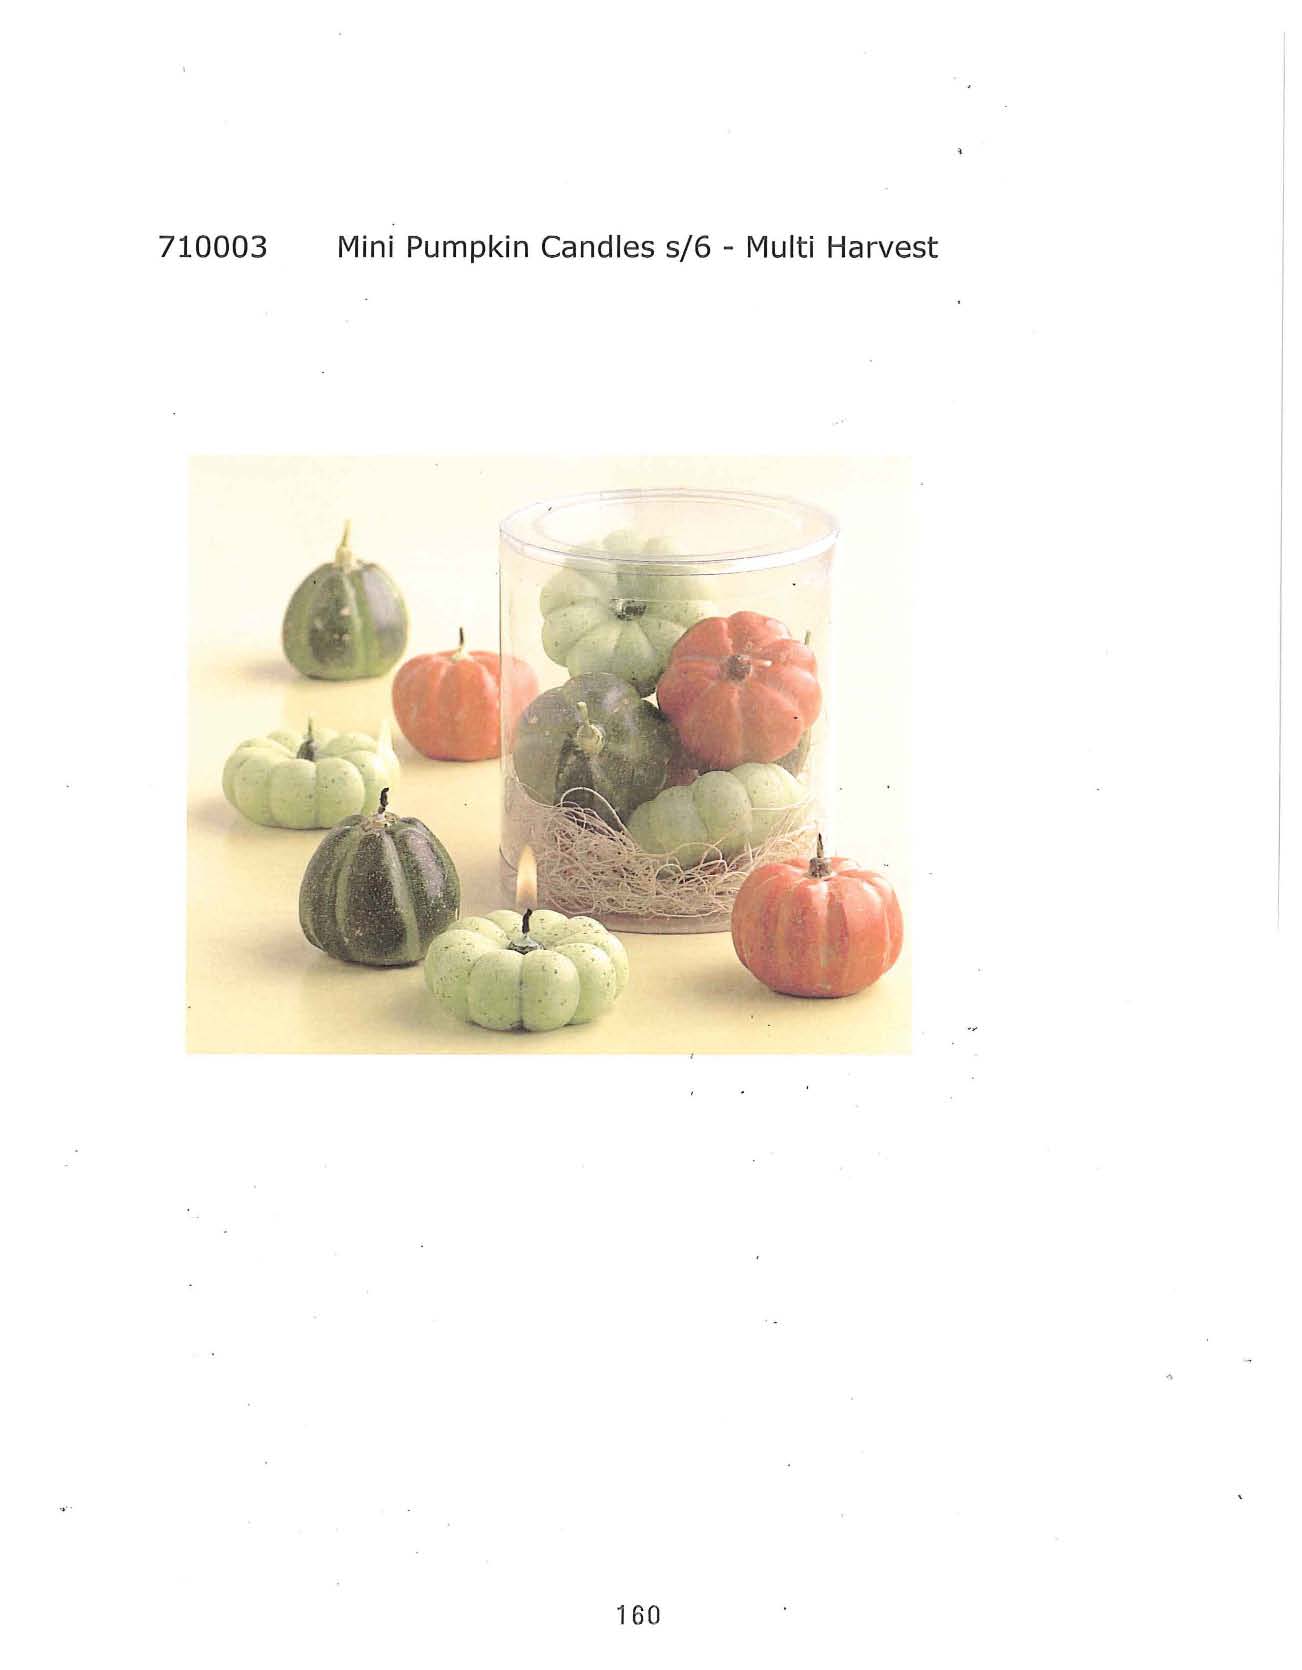 Mini Pumpkin Candle s/6 - Multi Harvest